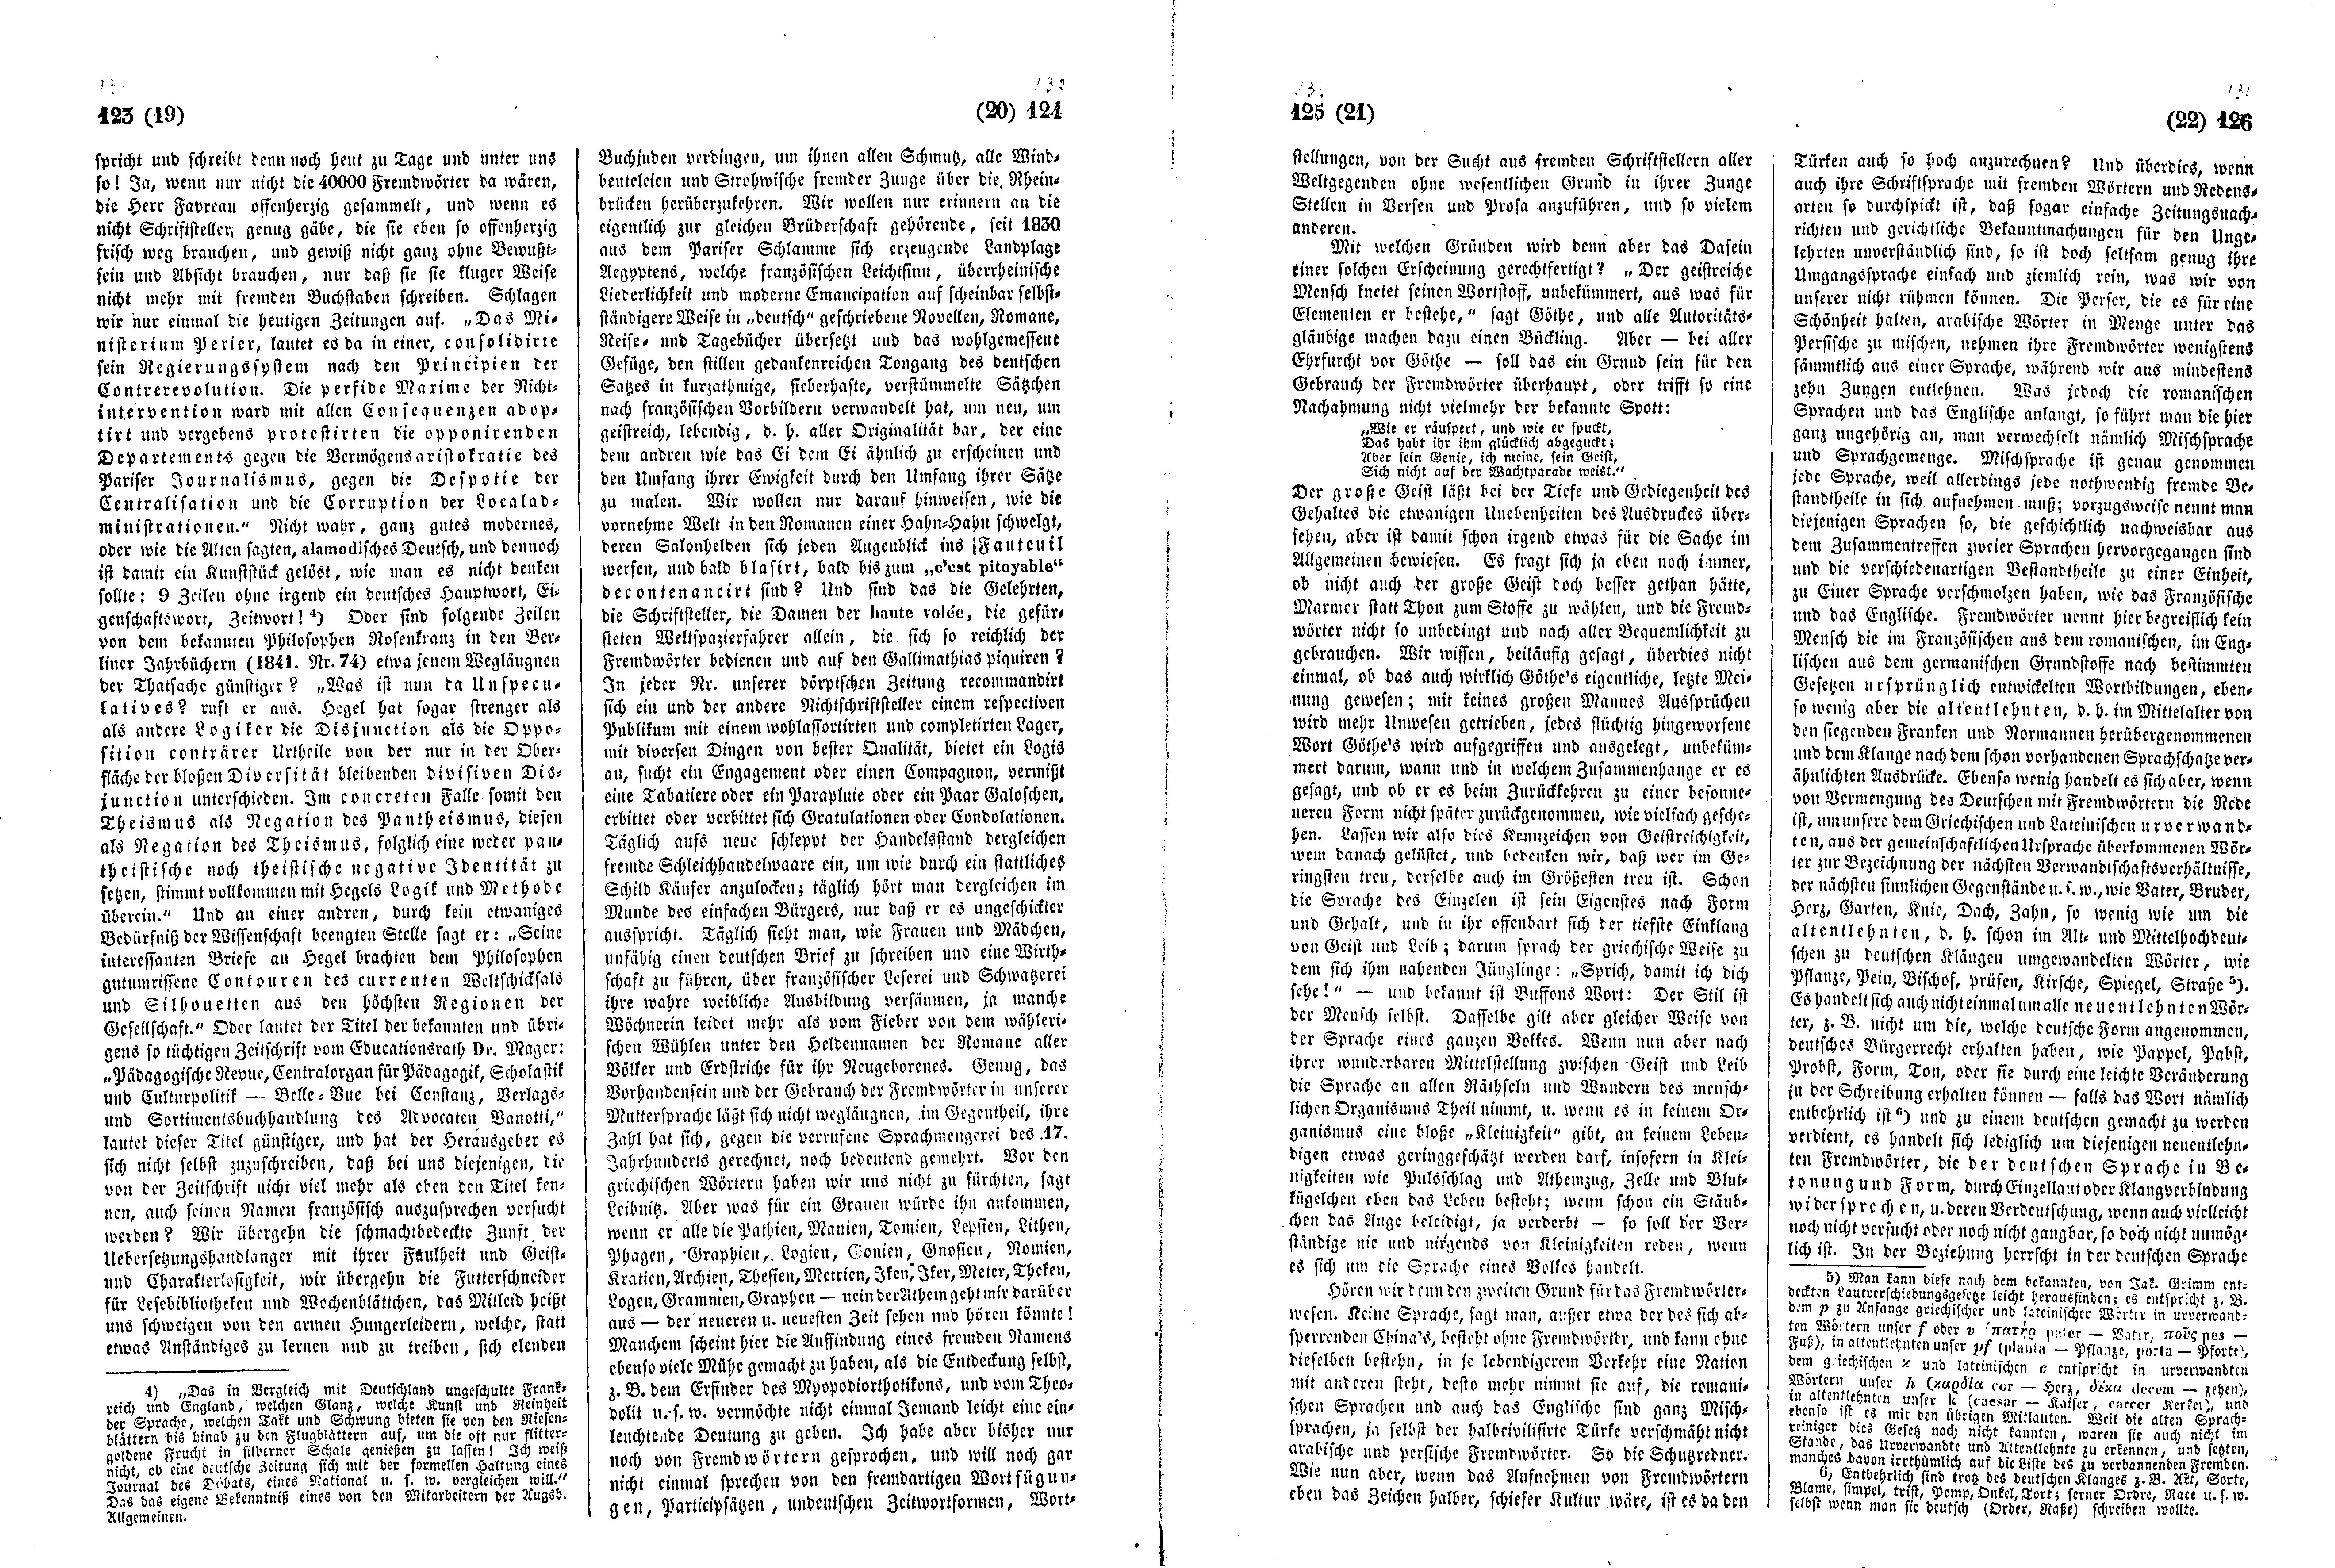 Das Inland [11] (1846) | 38. (131-134) Main body of text